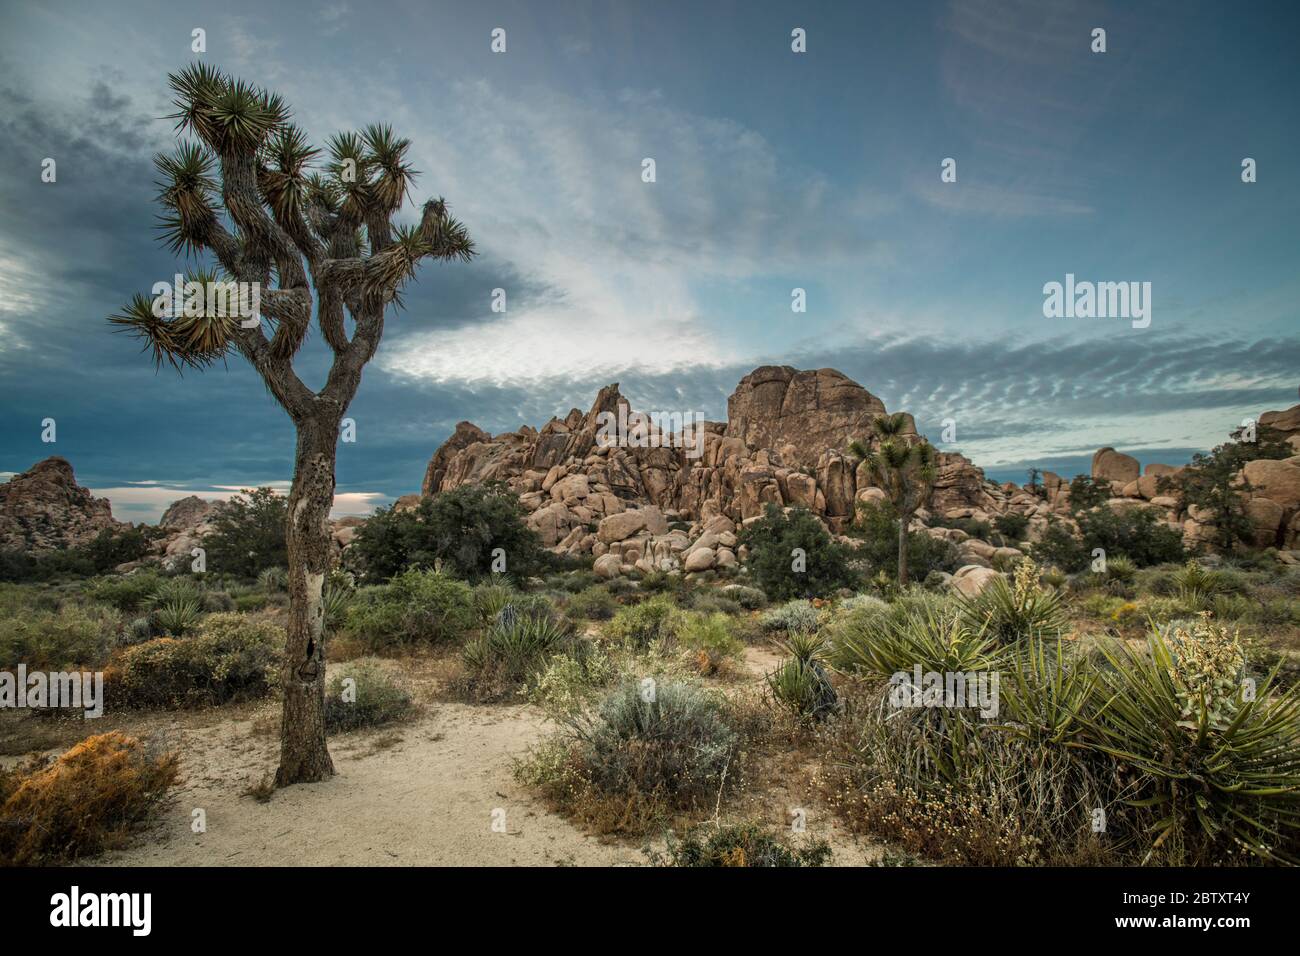 A Joshua Tree, desert vegetation, and rock formations in Joshua Tree National Park, California, USA. Stock Photo